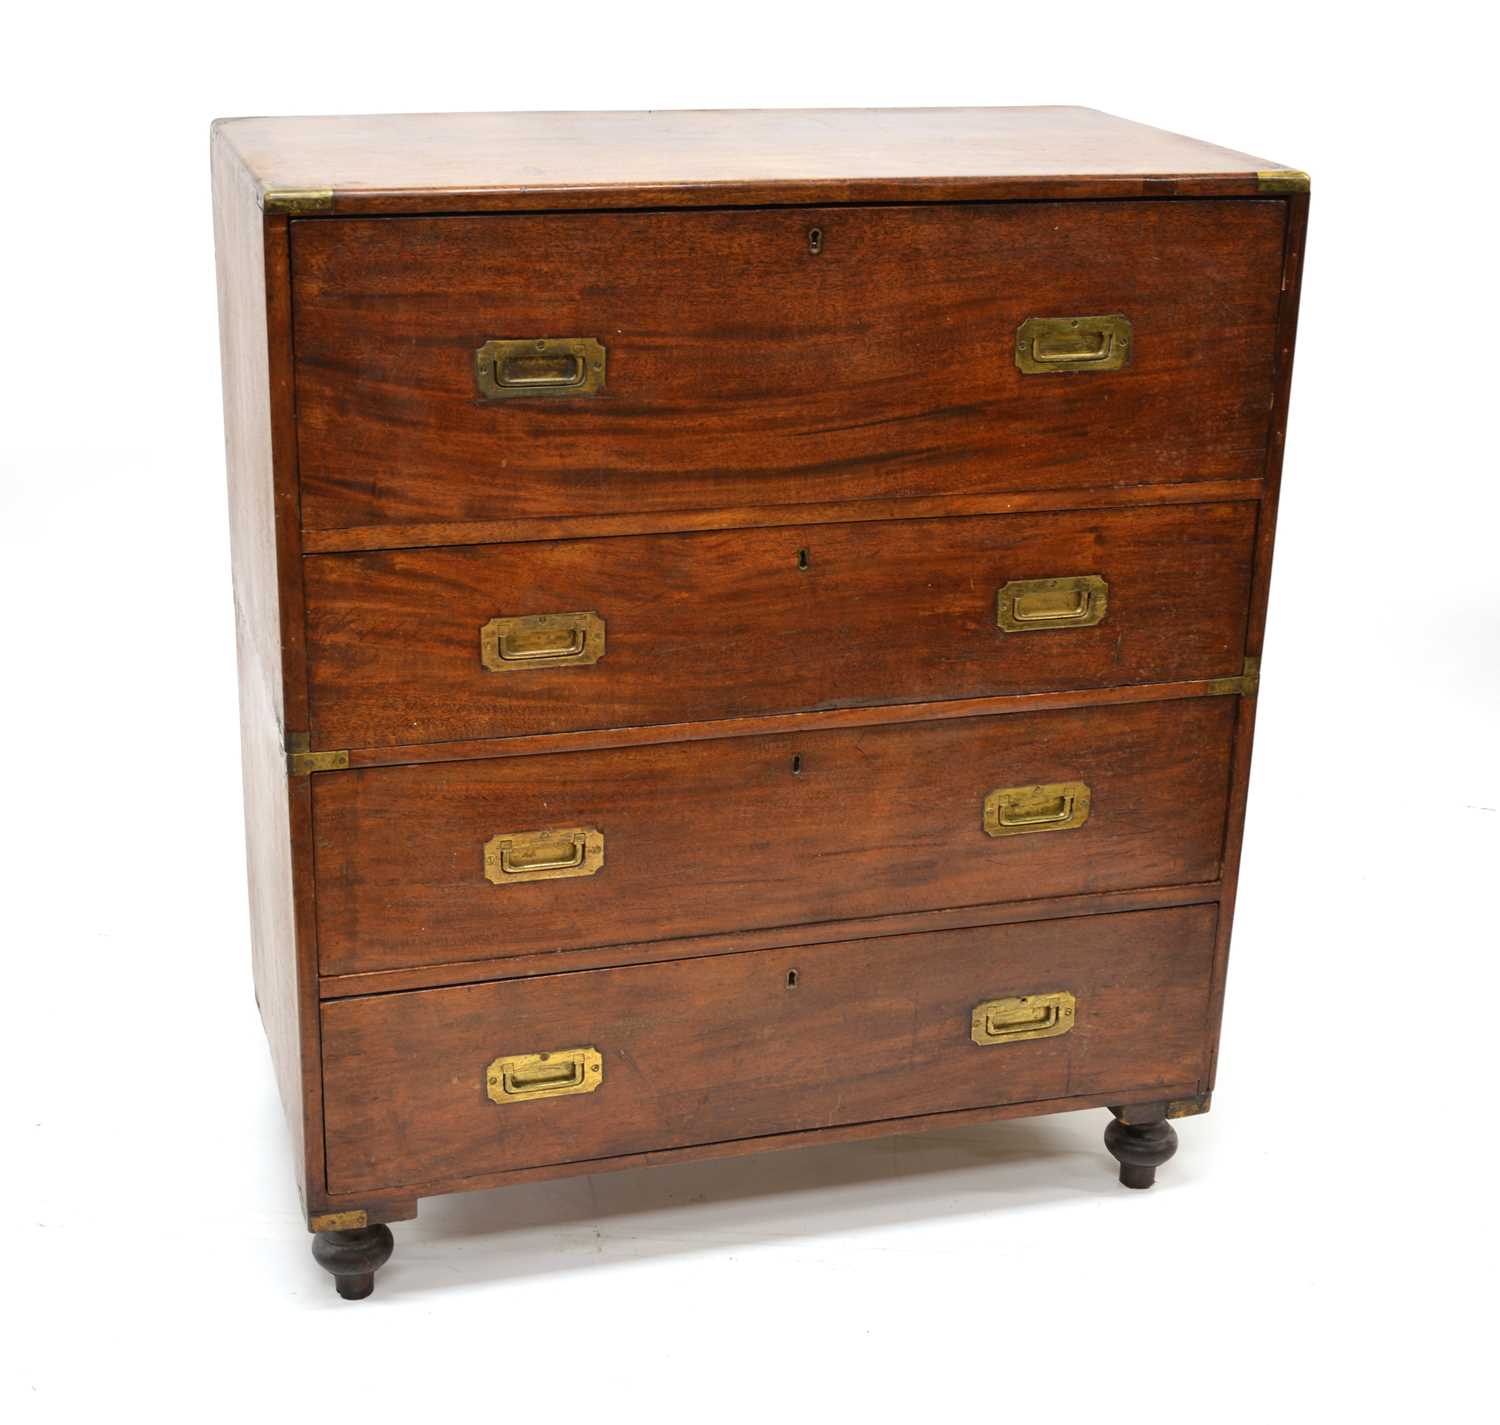 438 - Late 19th-century hardwood military chest